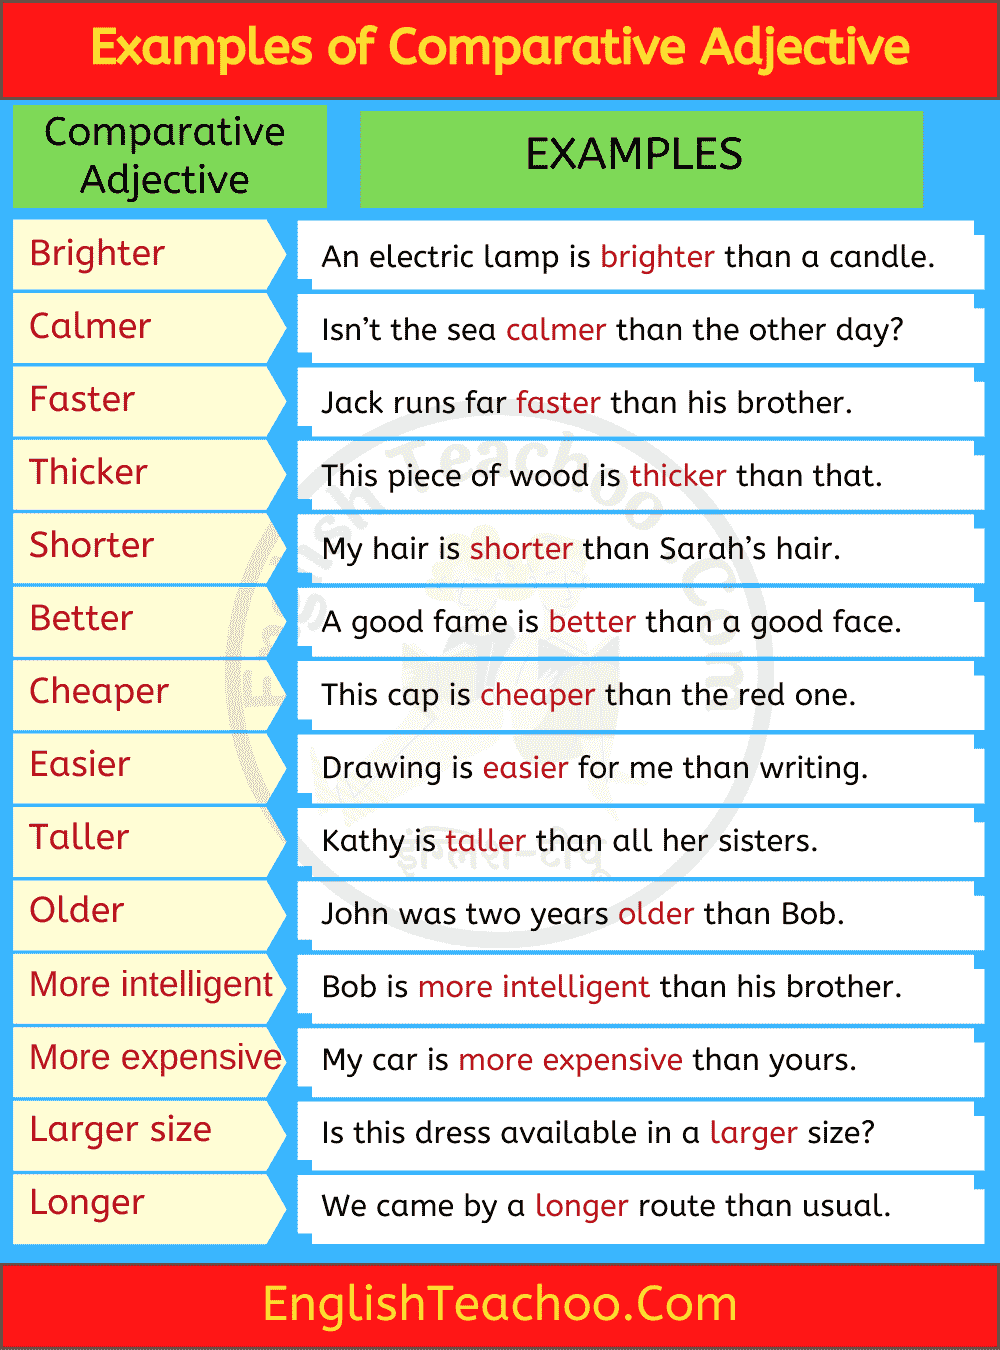 Comparative Adjective Examples EnglishTeachoo